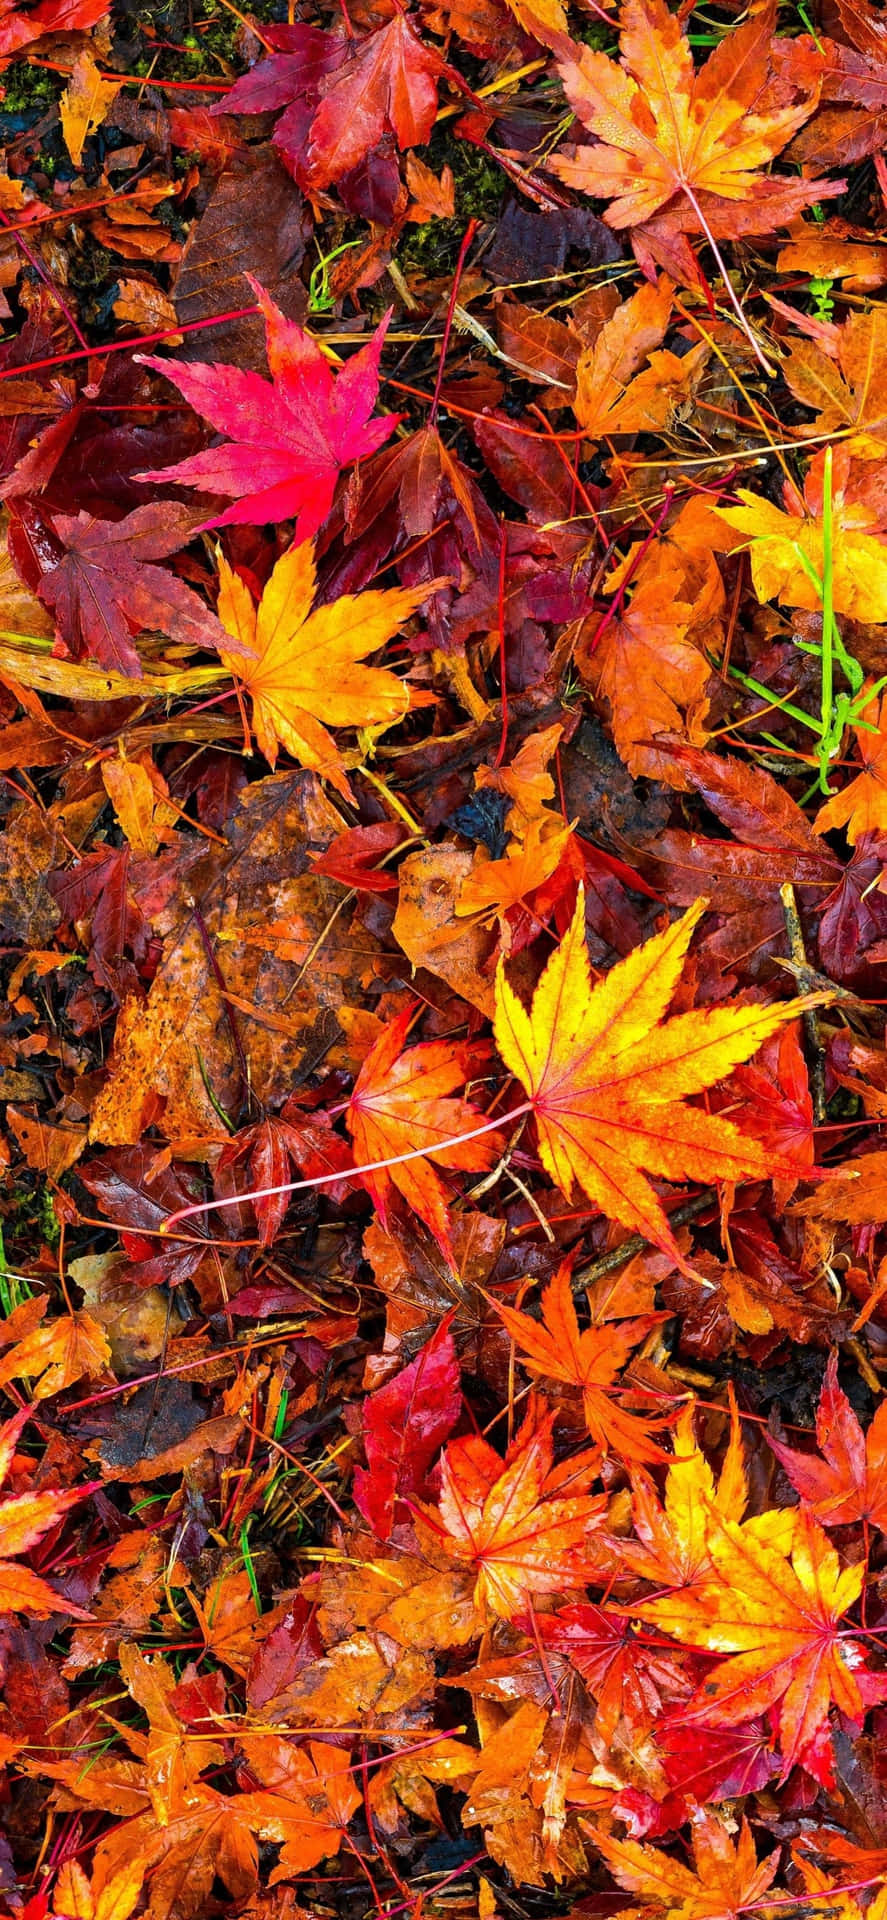 "Autumn Leaves" Wallpaper